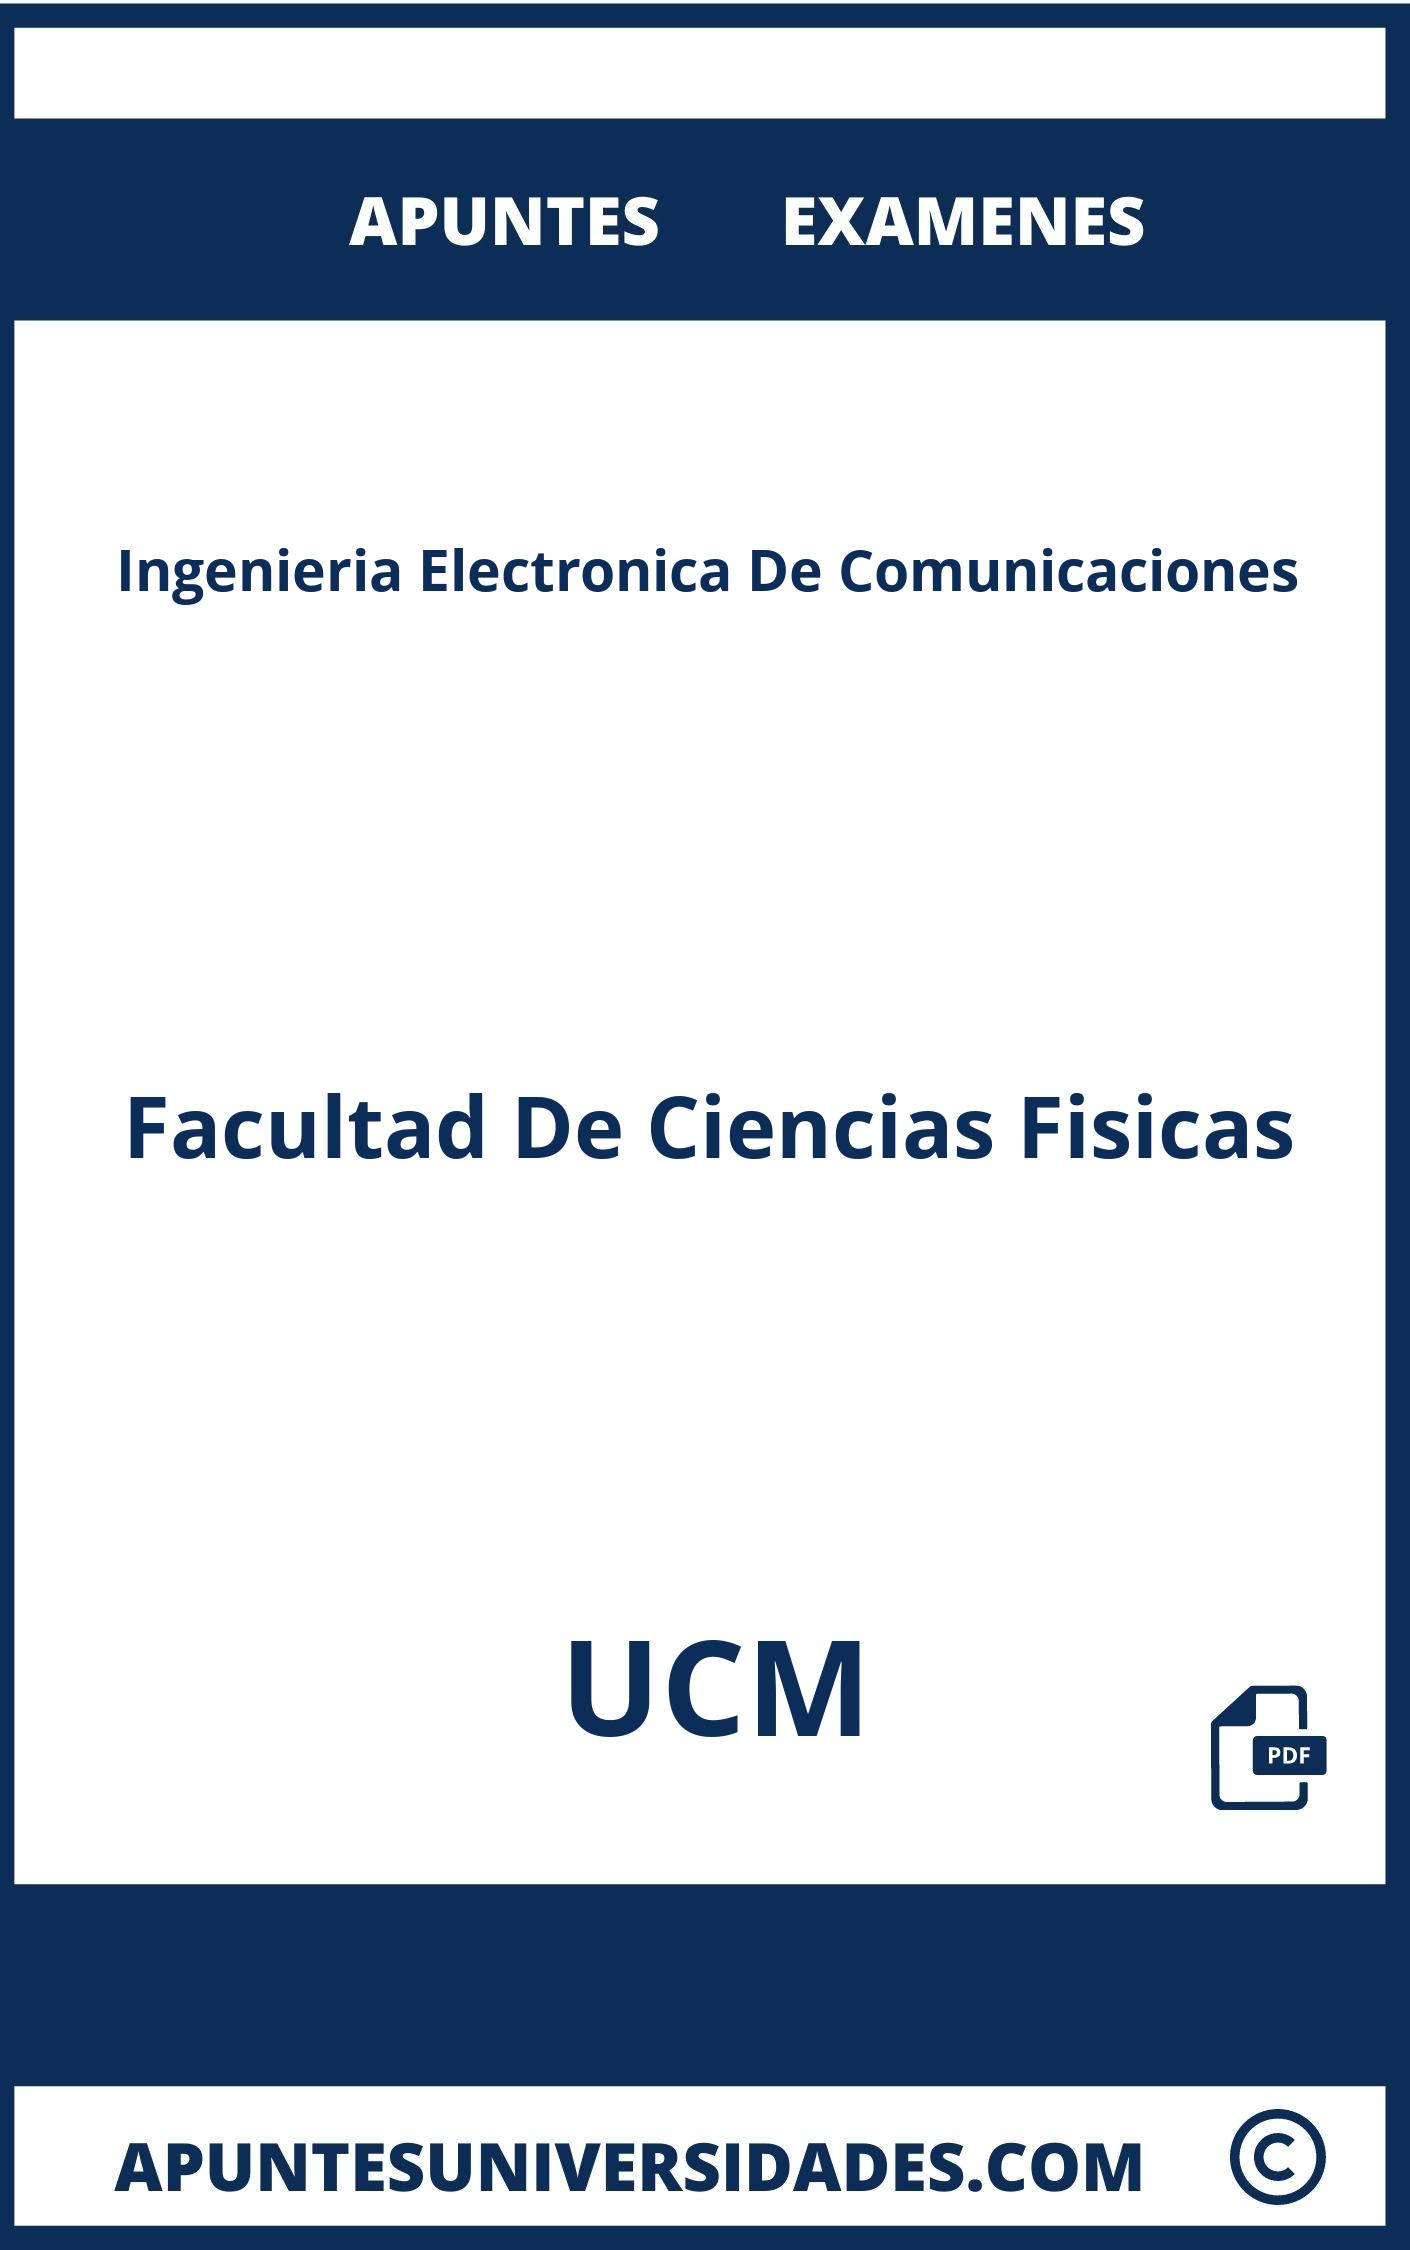 Ingenieria Electronica De Comunicaciones UCM Examenes Apuntes